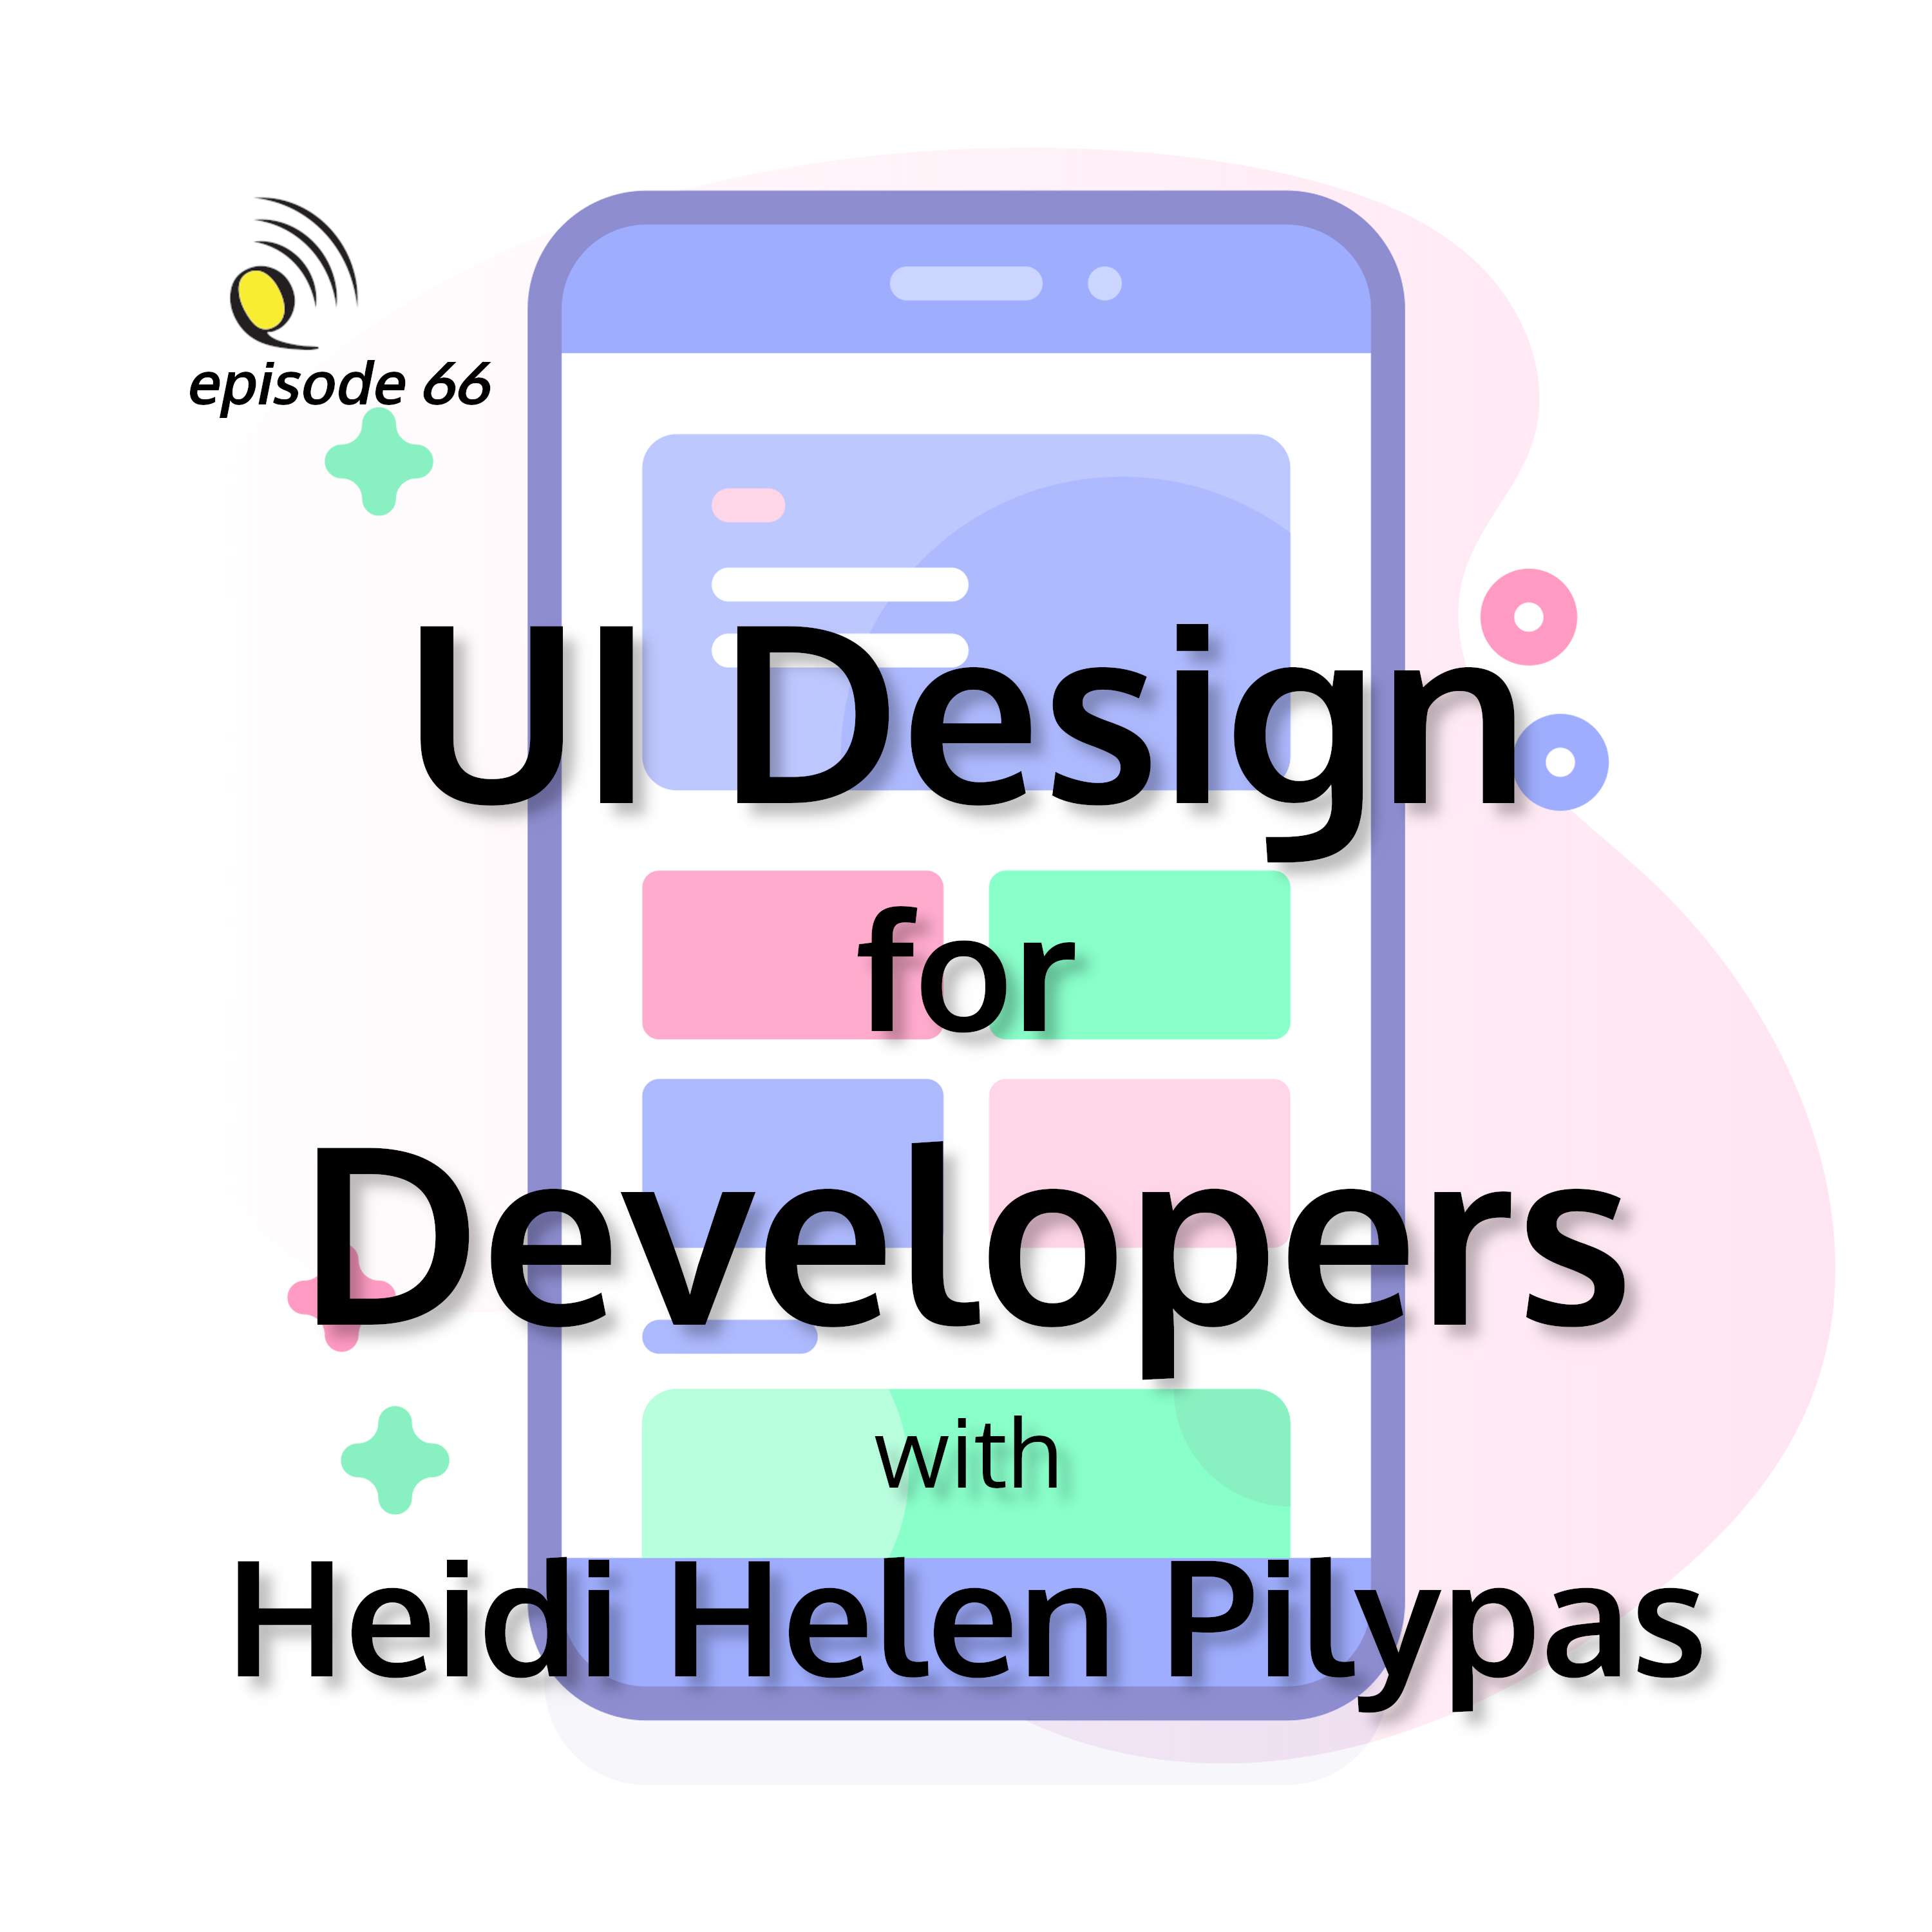 UI Design for Developers with Heidi Helen Pilypas